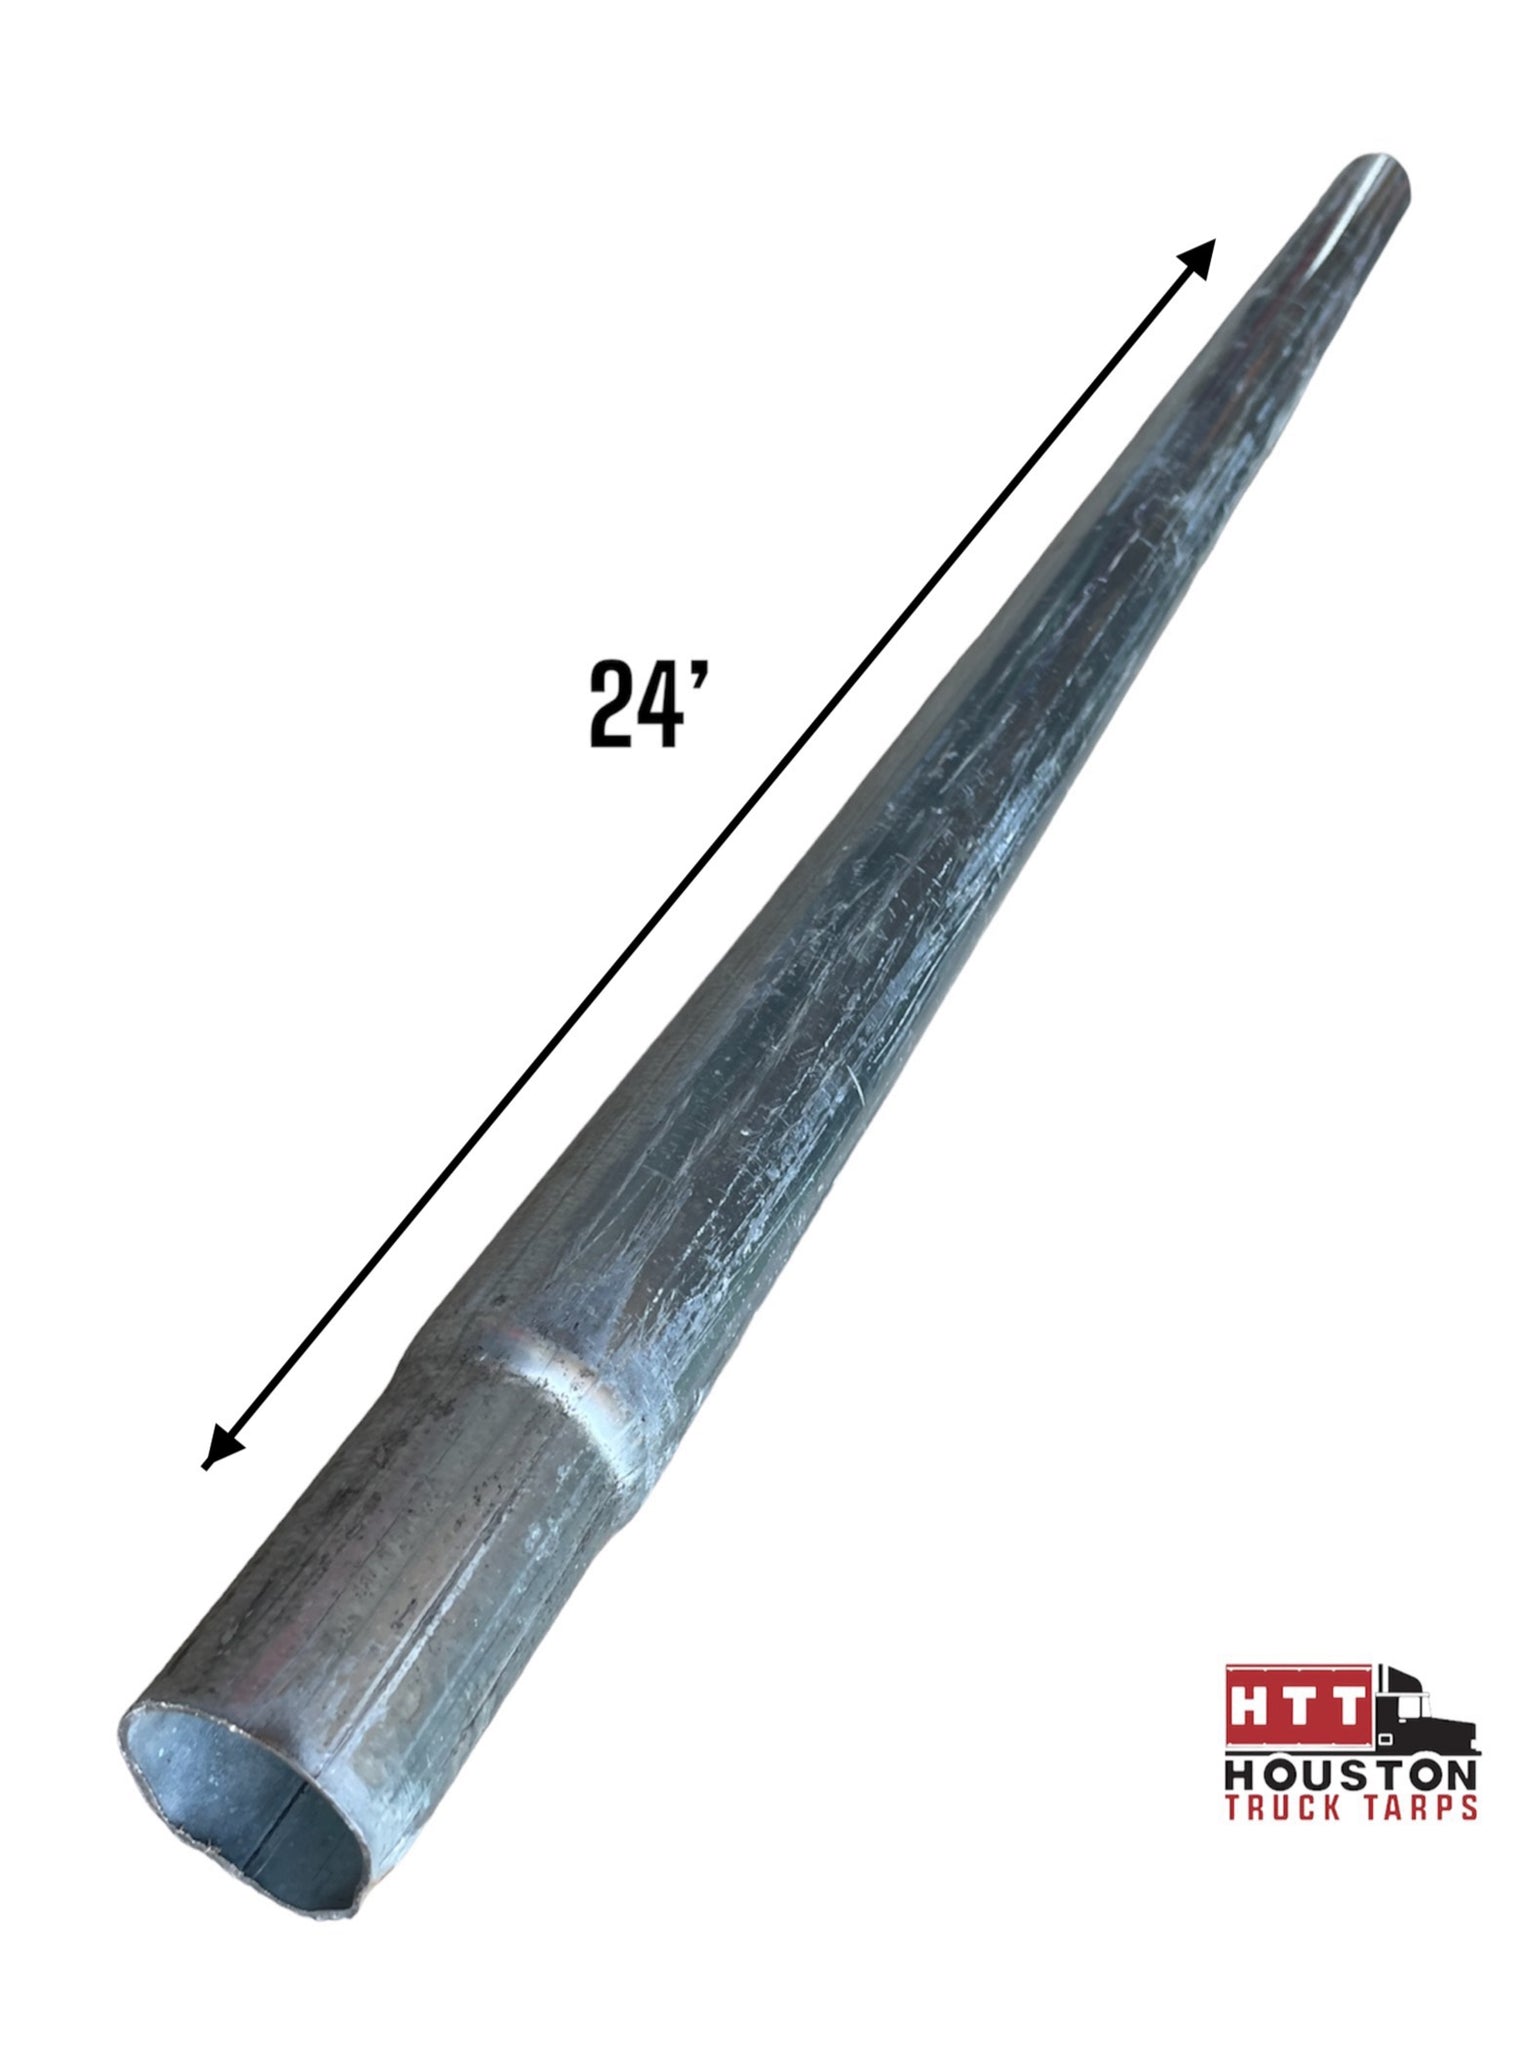 Rollpipe 2” x 24’ Long